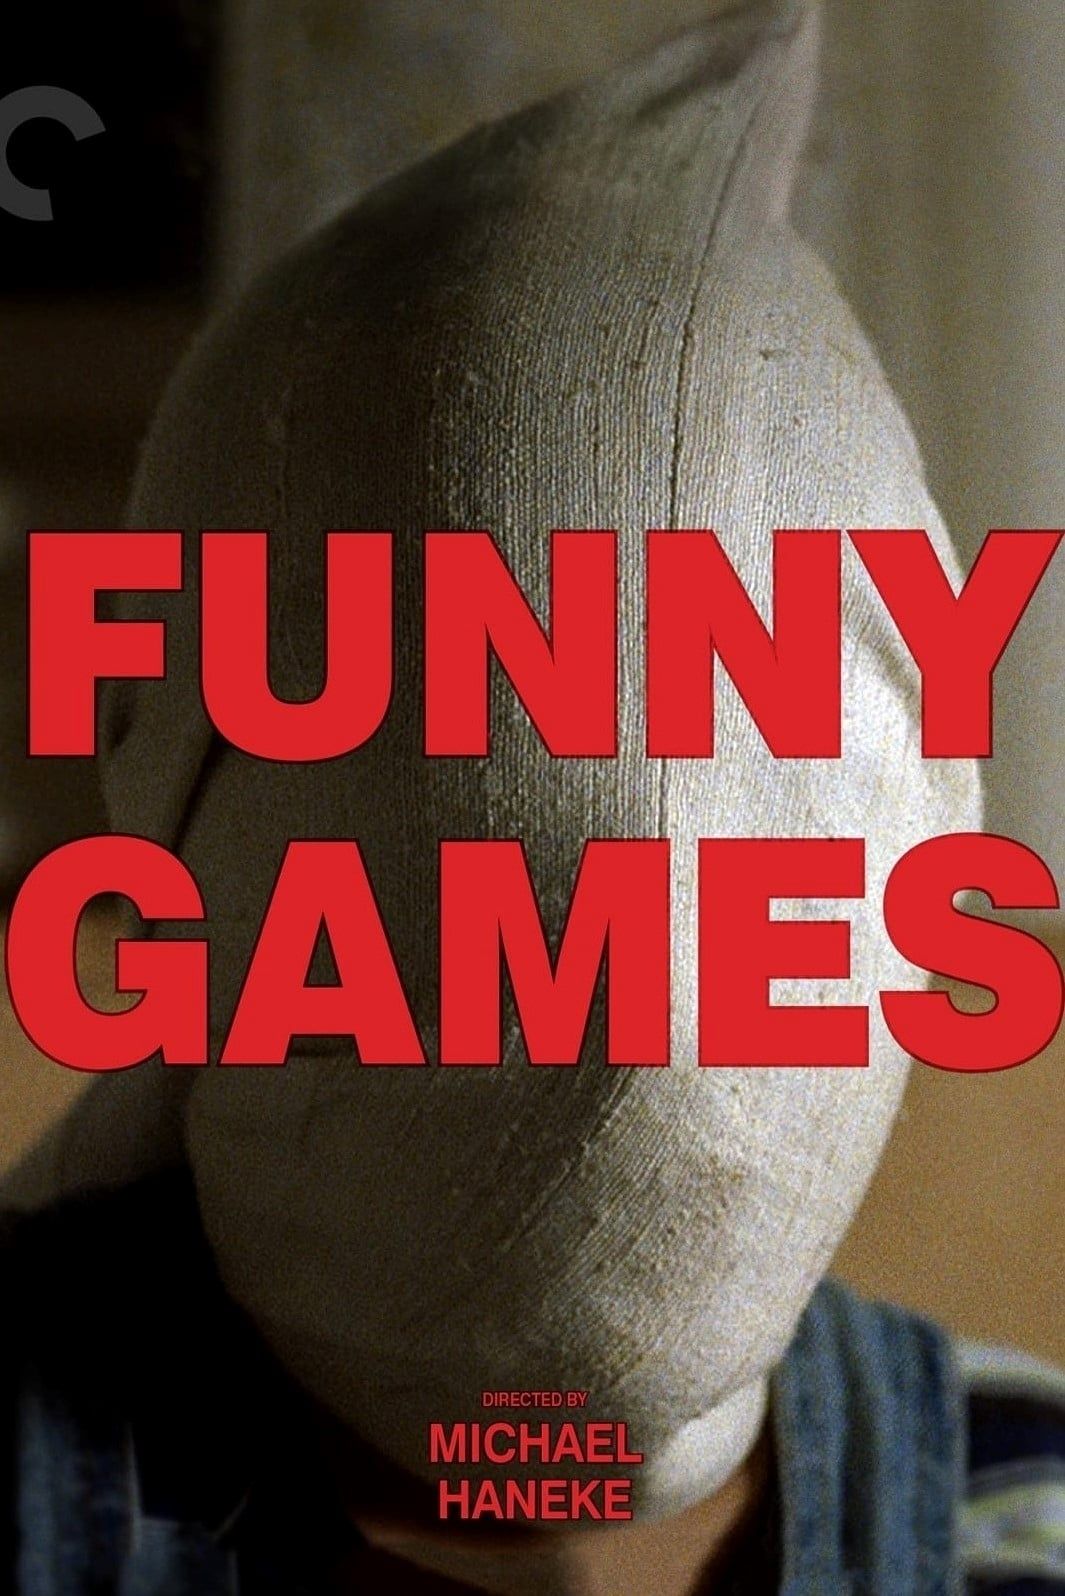 Watch Funny Games (2008) Full Movie Online - Plex